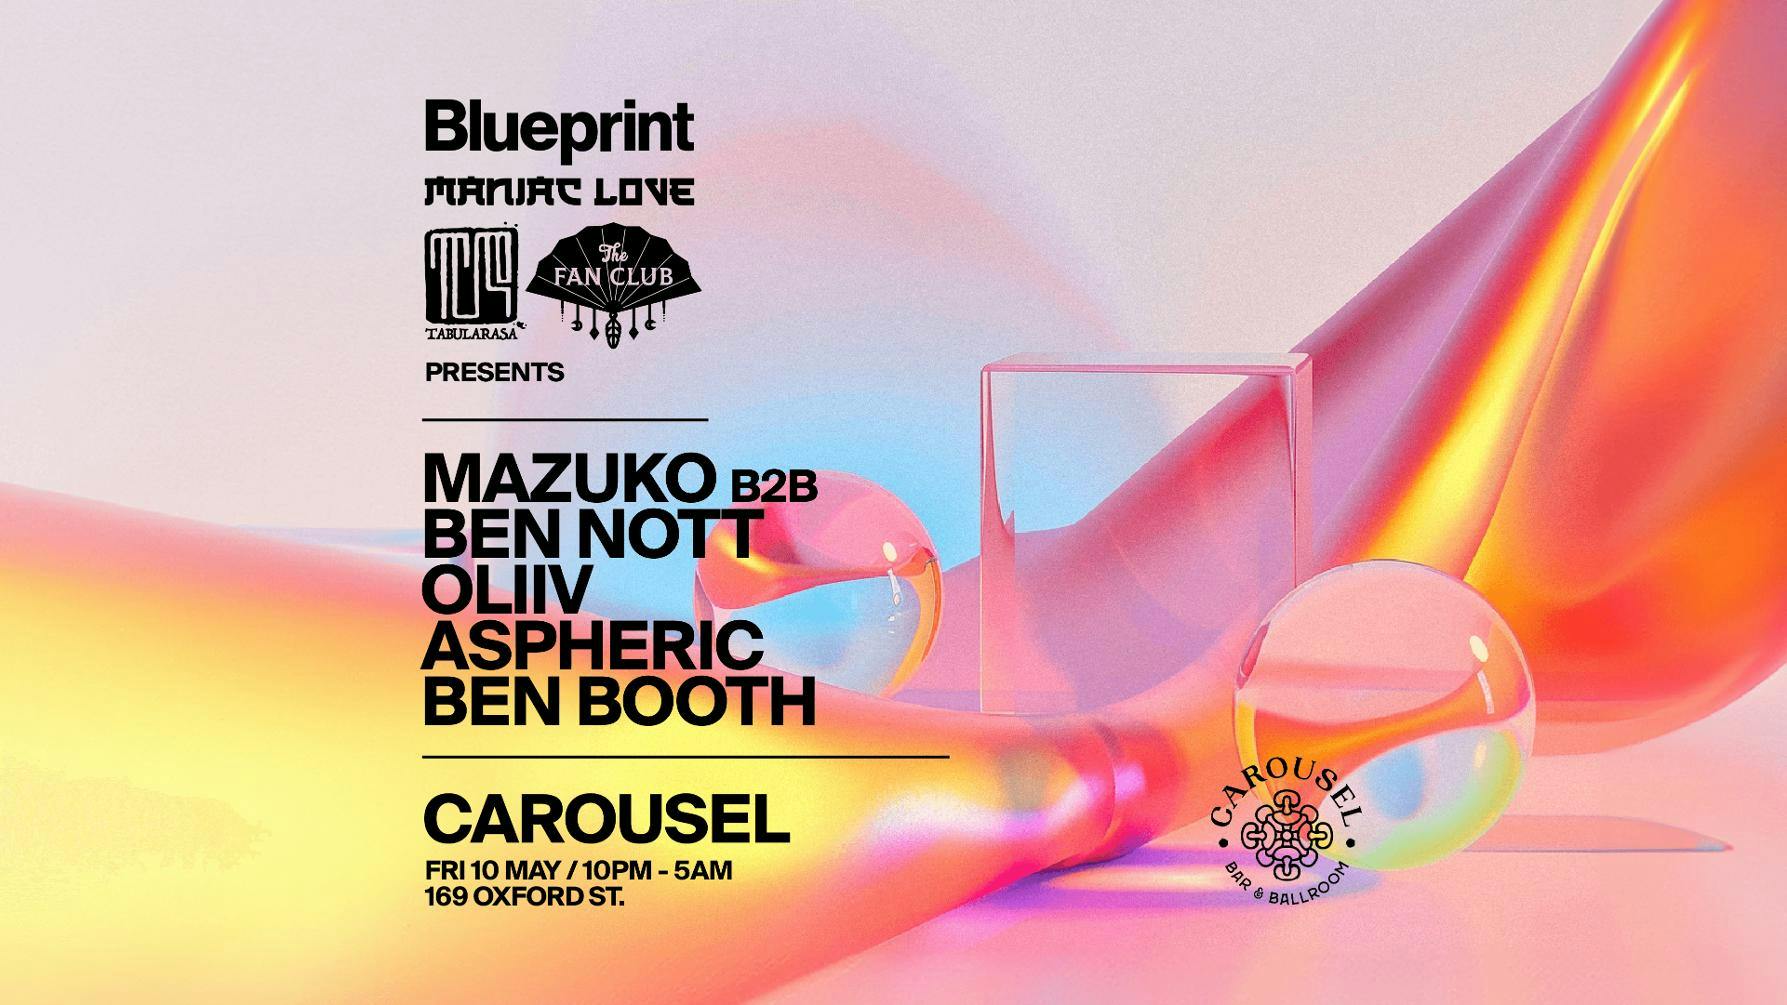 Blueprint x Tabularasa x Maniac Love x The Fan Club x Carousel